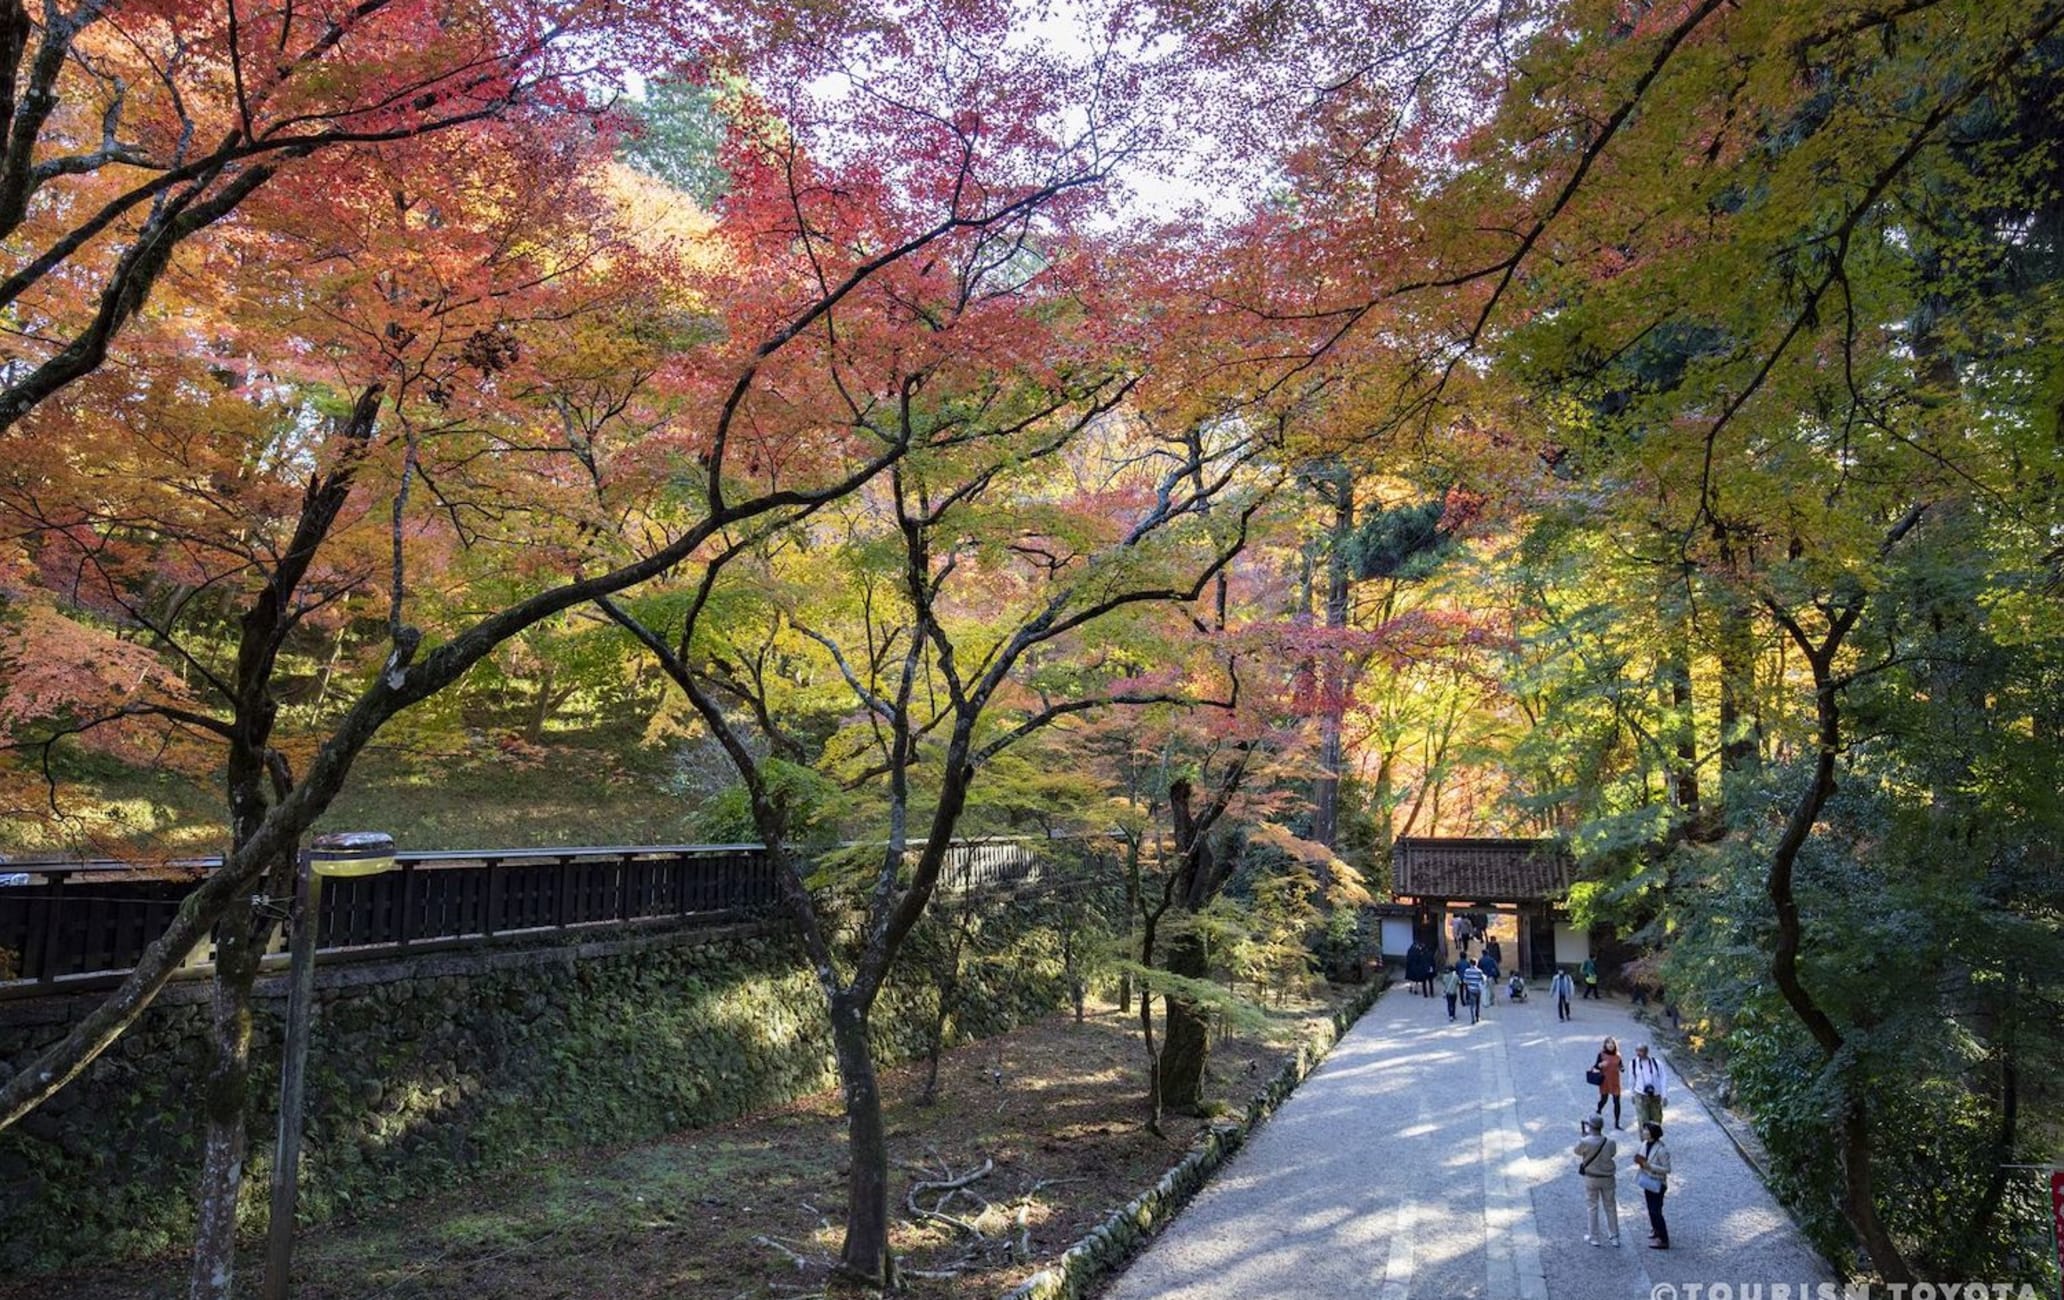 Korankei Valley Autumn Leaves